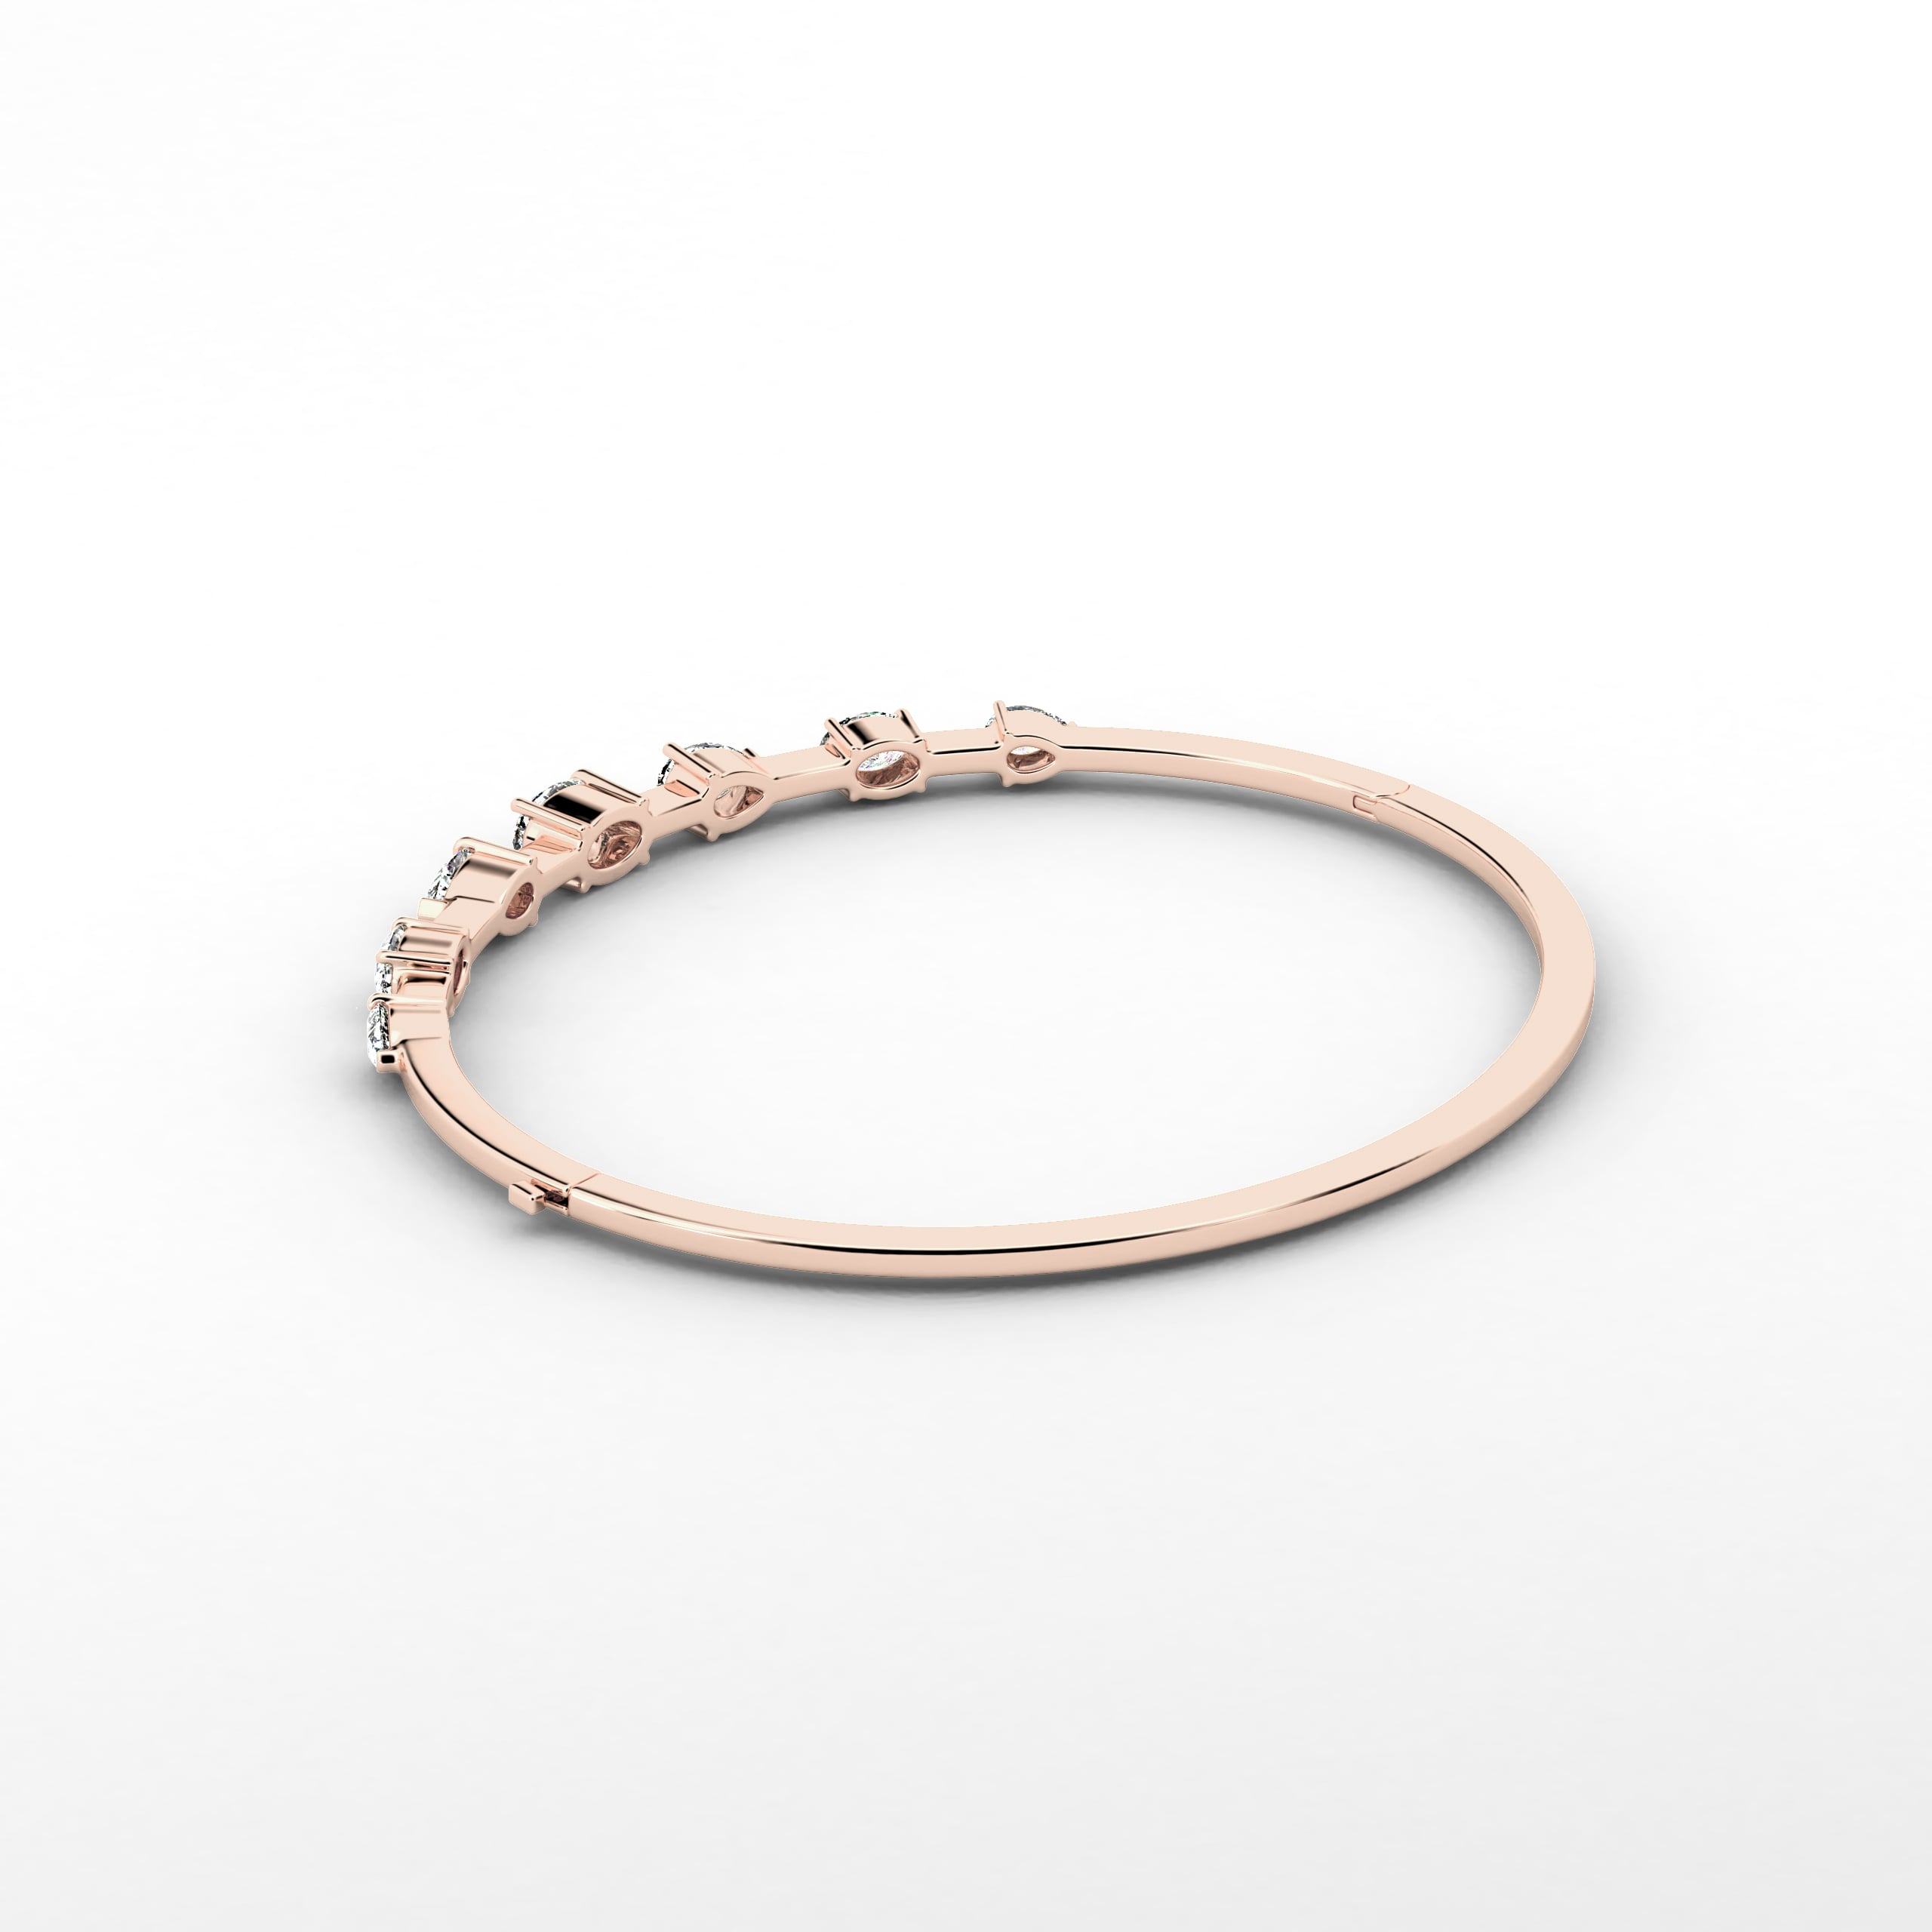 Rose gold pear and oval diamond bangle bracelet